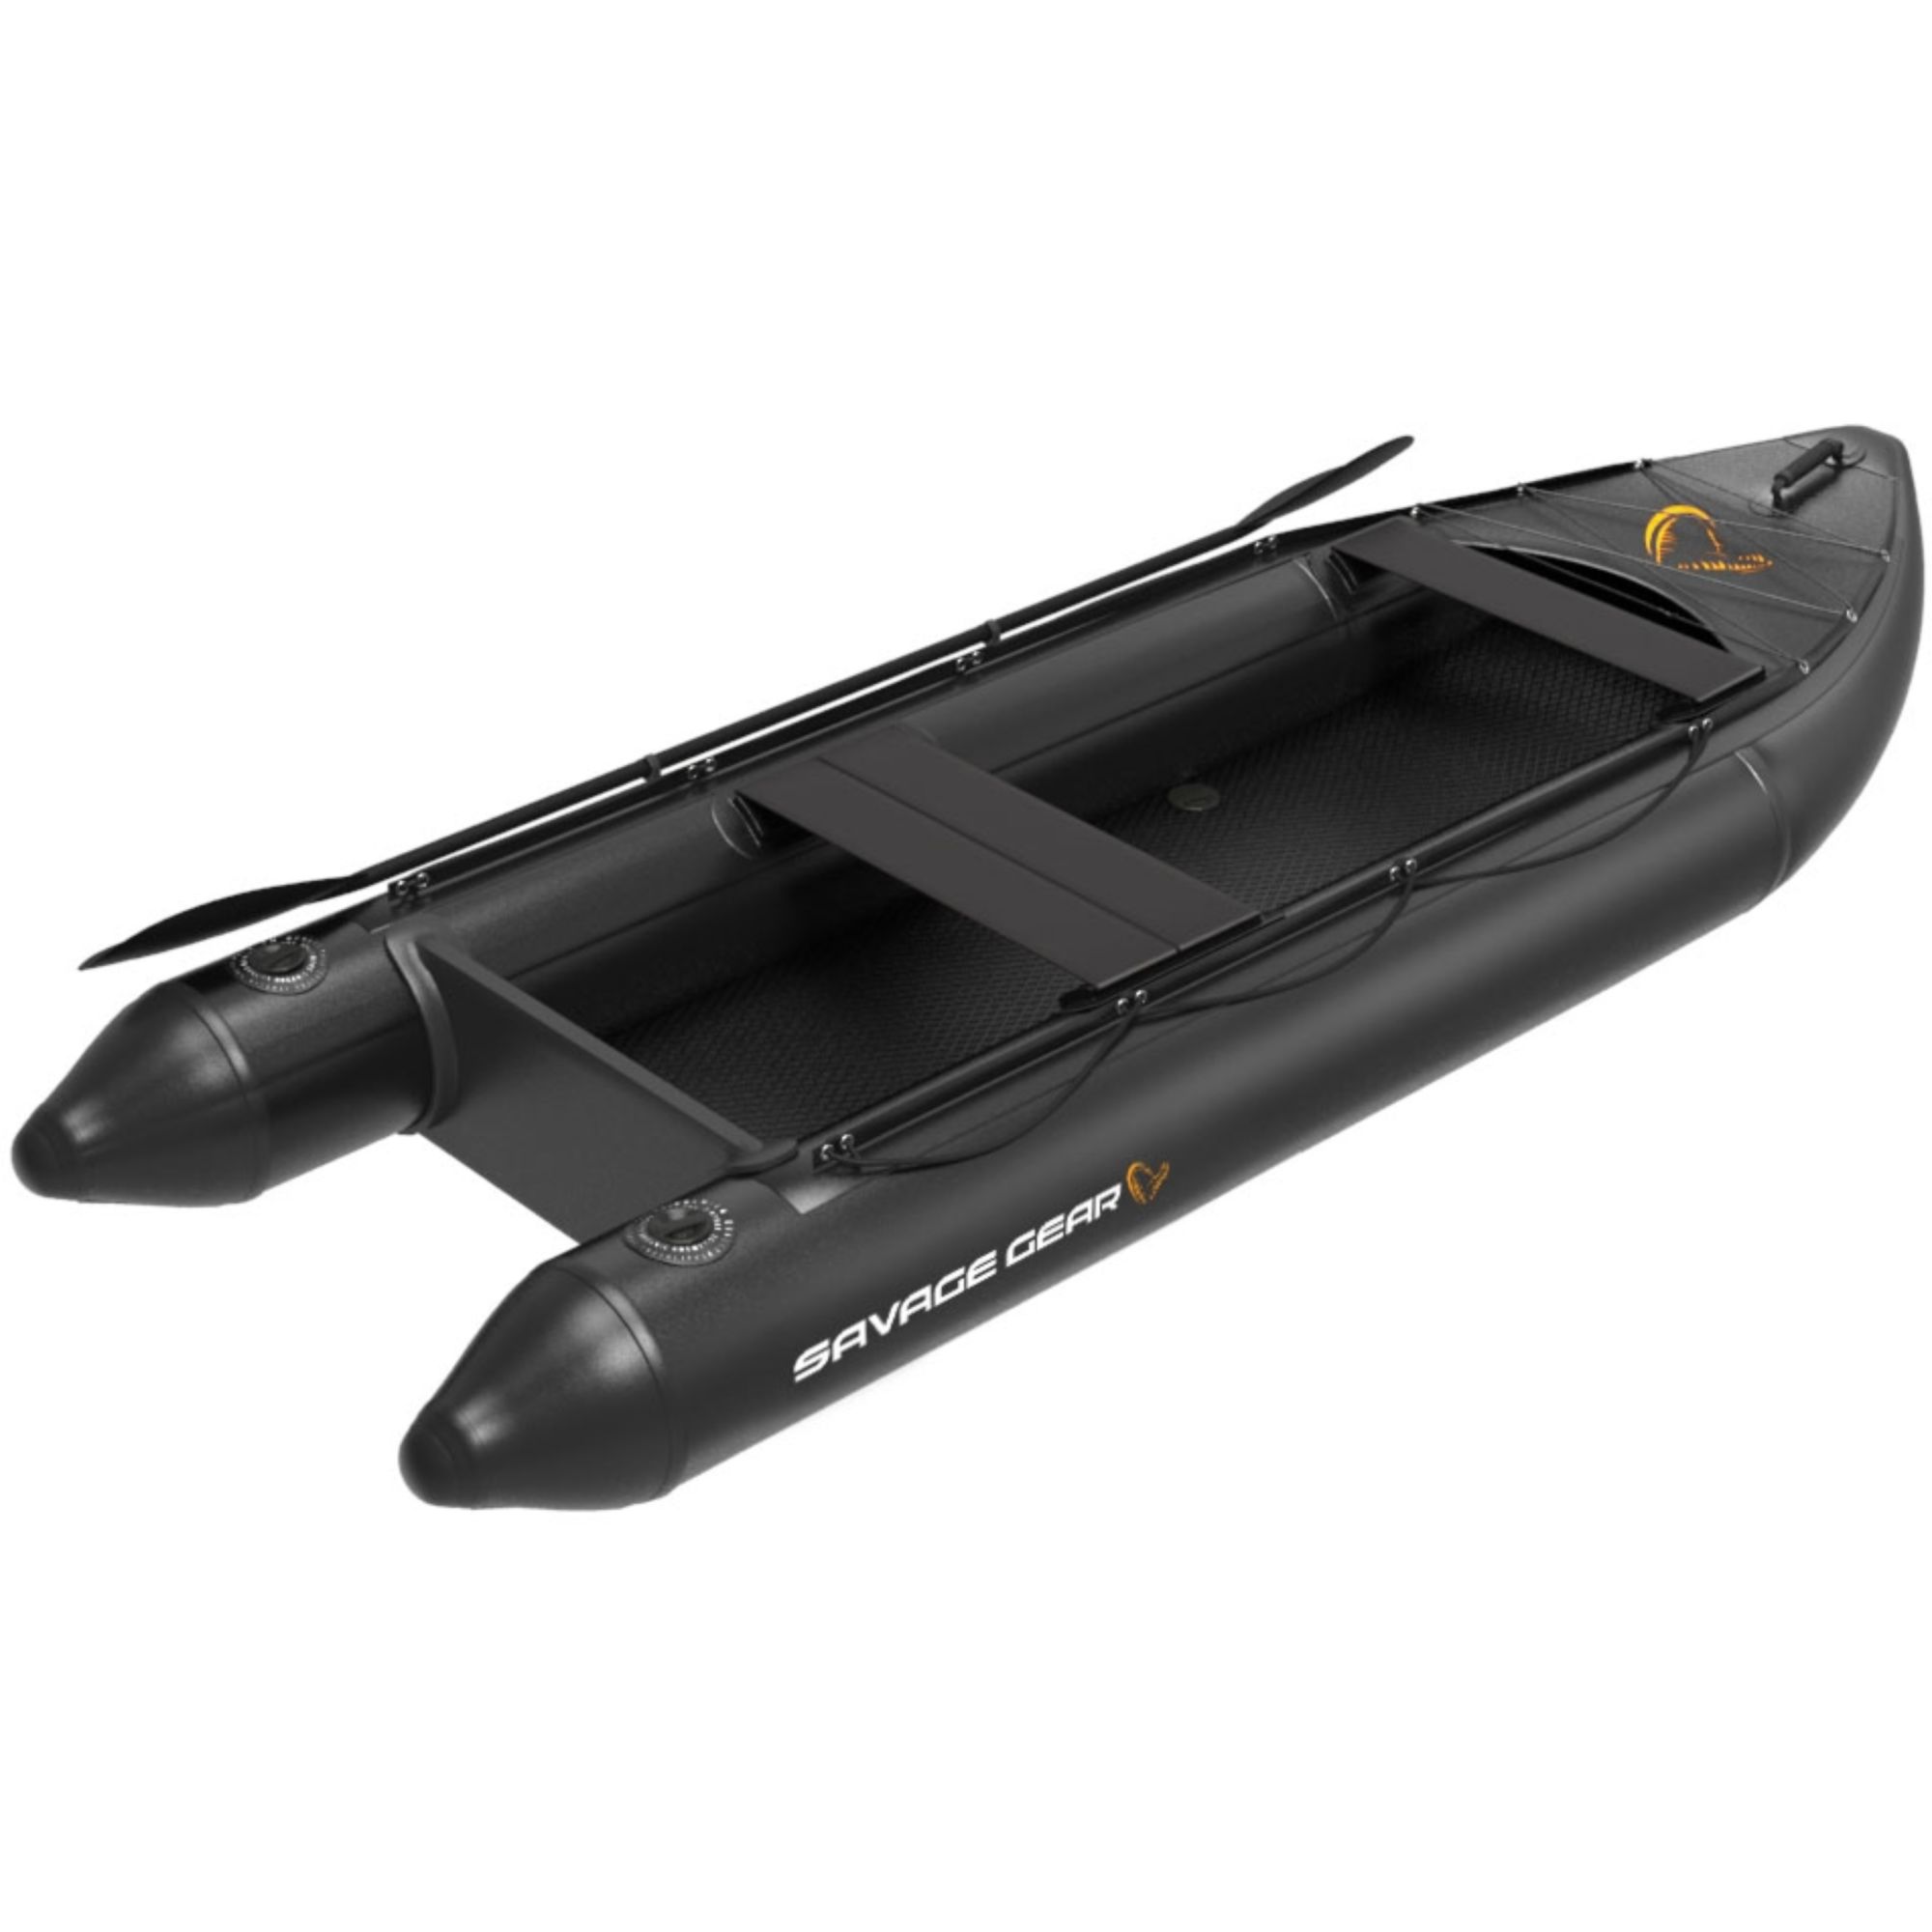 Se Savagear E-Rider Kayak 330-110cm hos Outdoor i Centrum